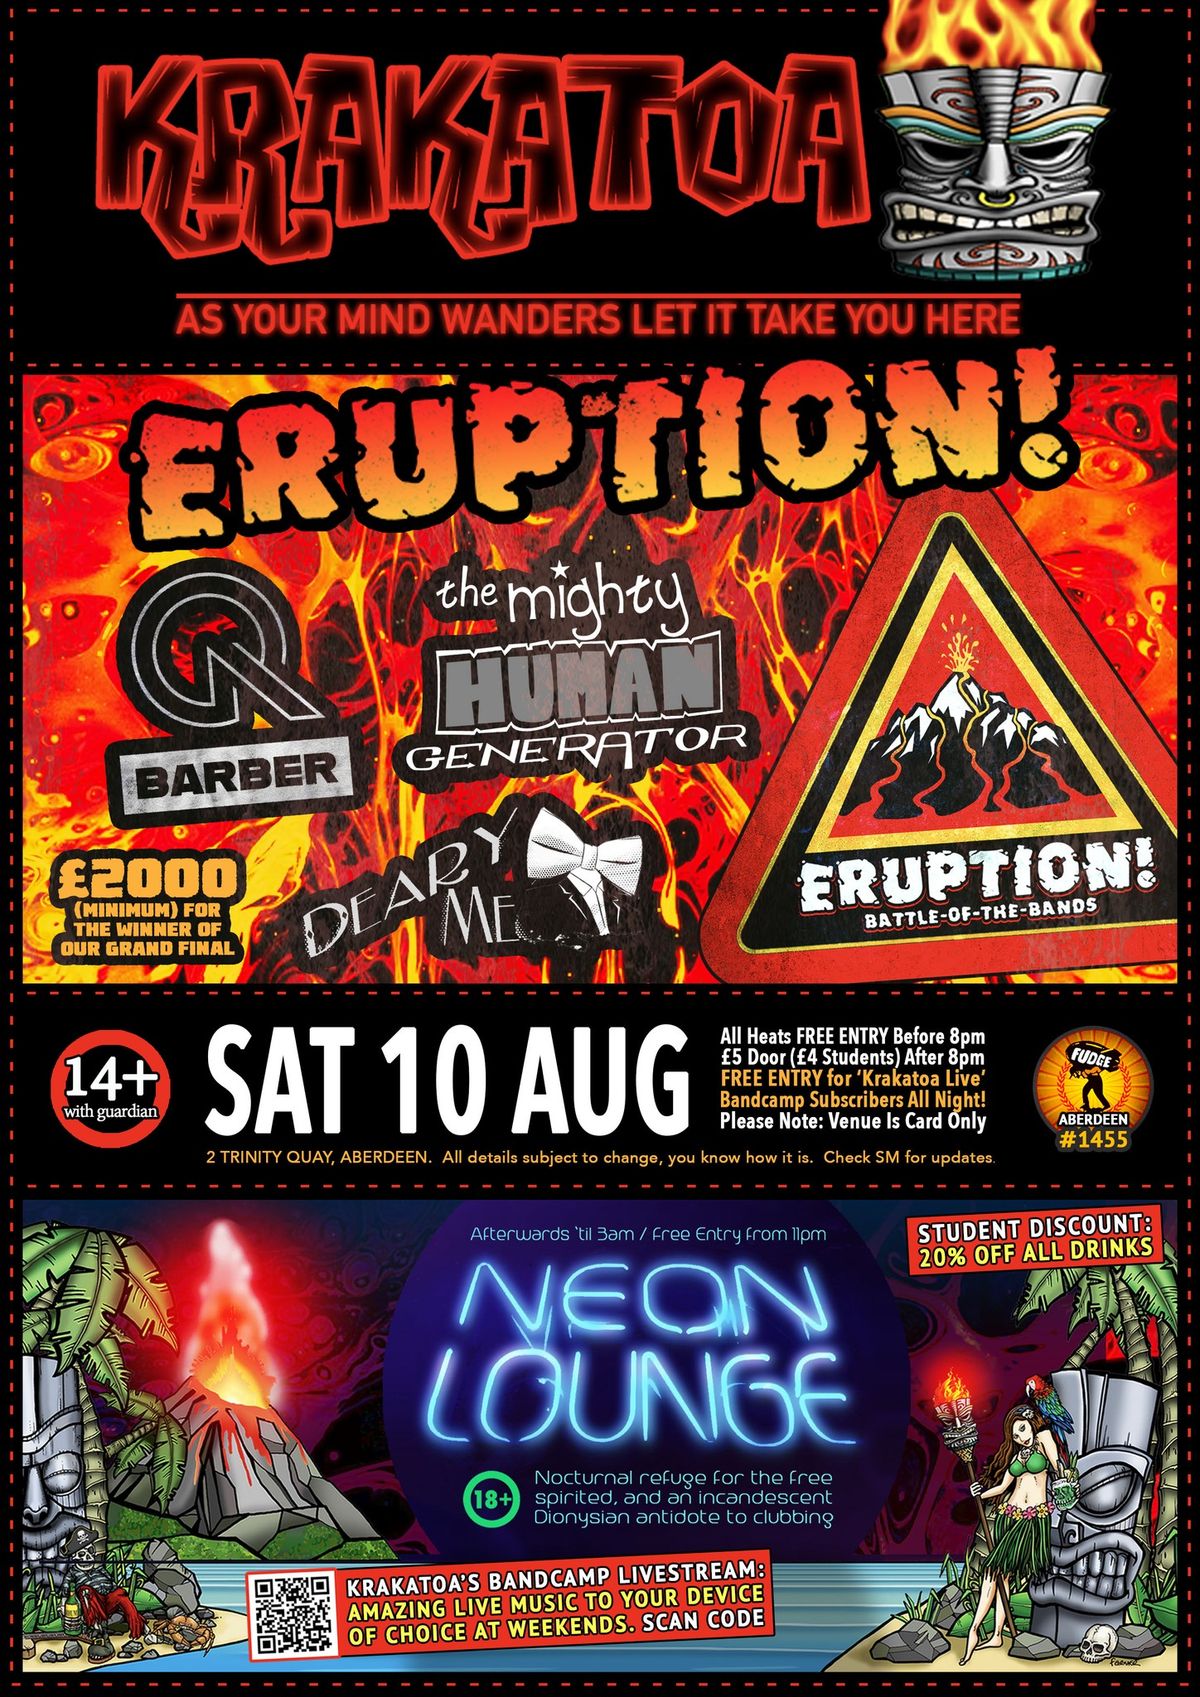 Eruption! \u00a32K BOTB - Heat - Barber Q + The Mighty Human Generator + Deary Me